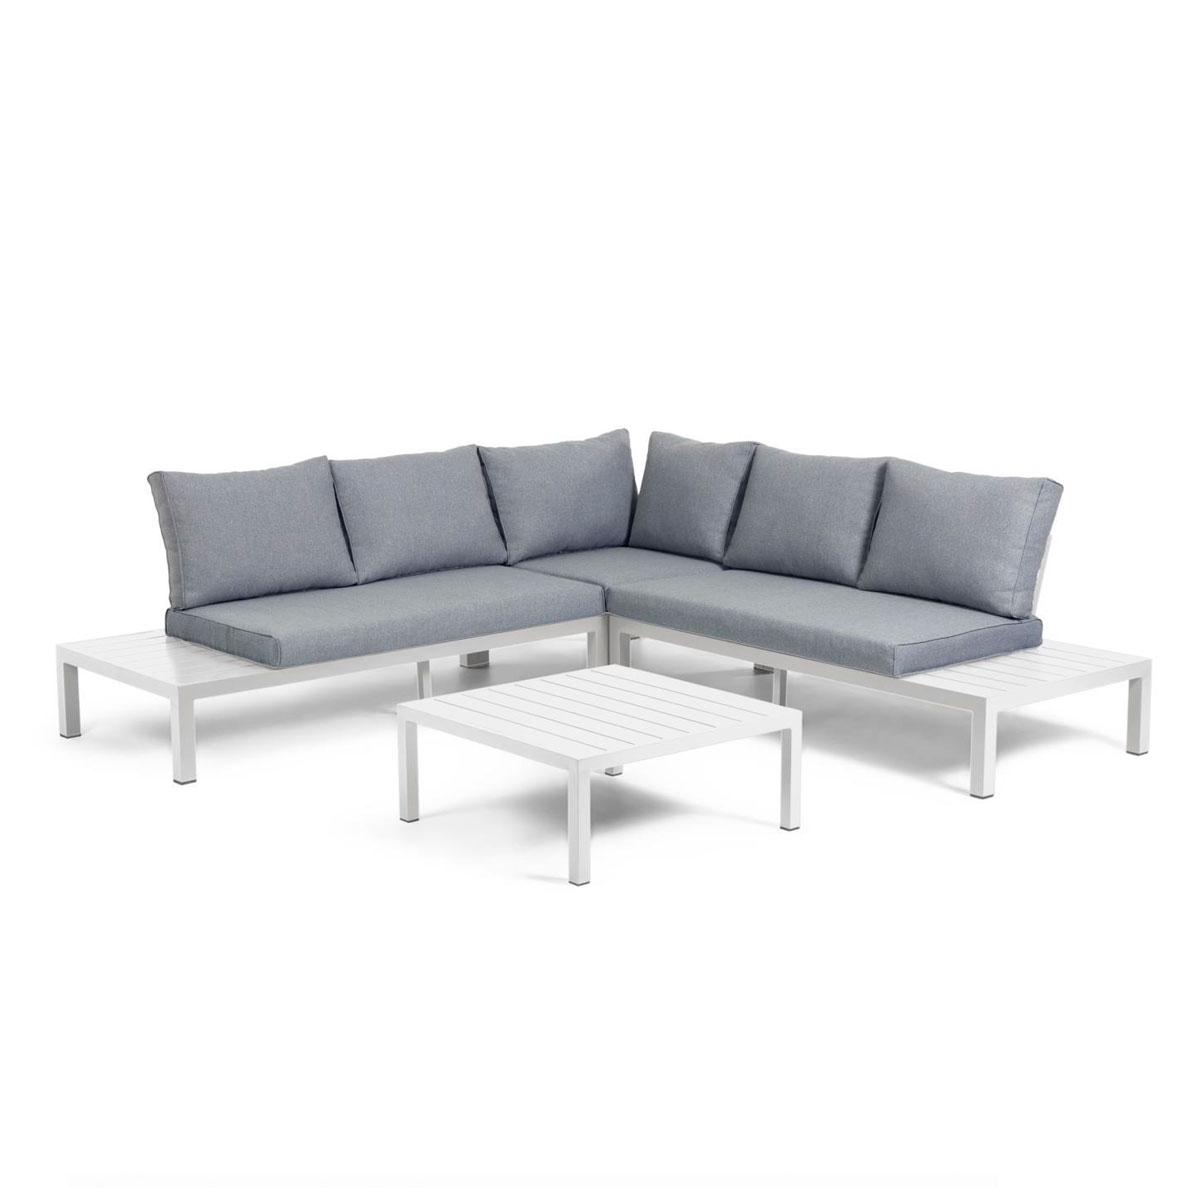 Conjunto exterior aluminio blanco- Artikalia Muebles de diseño